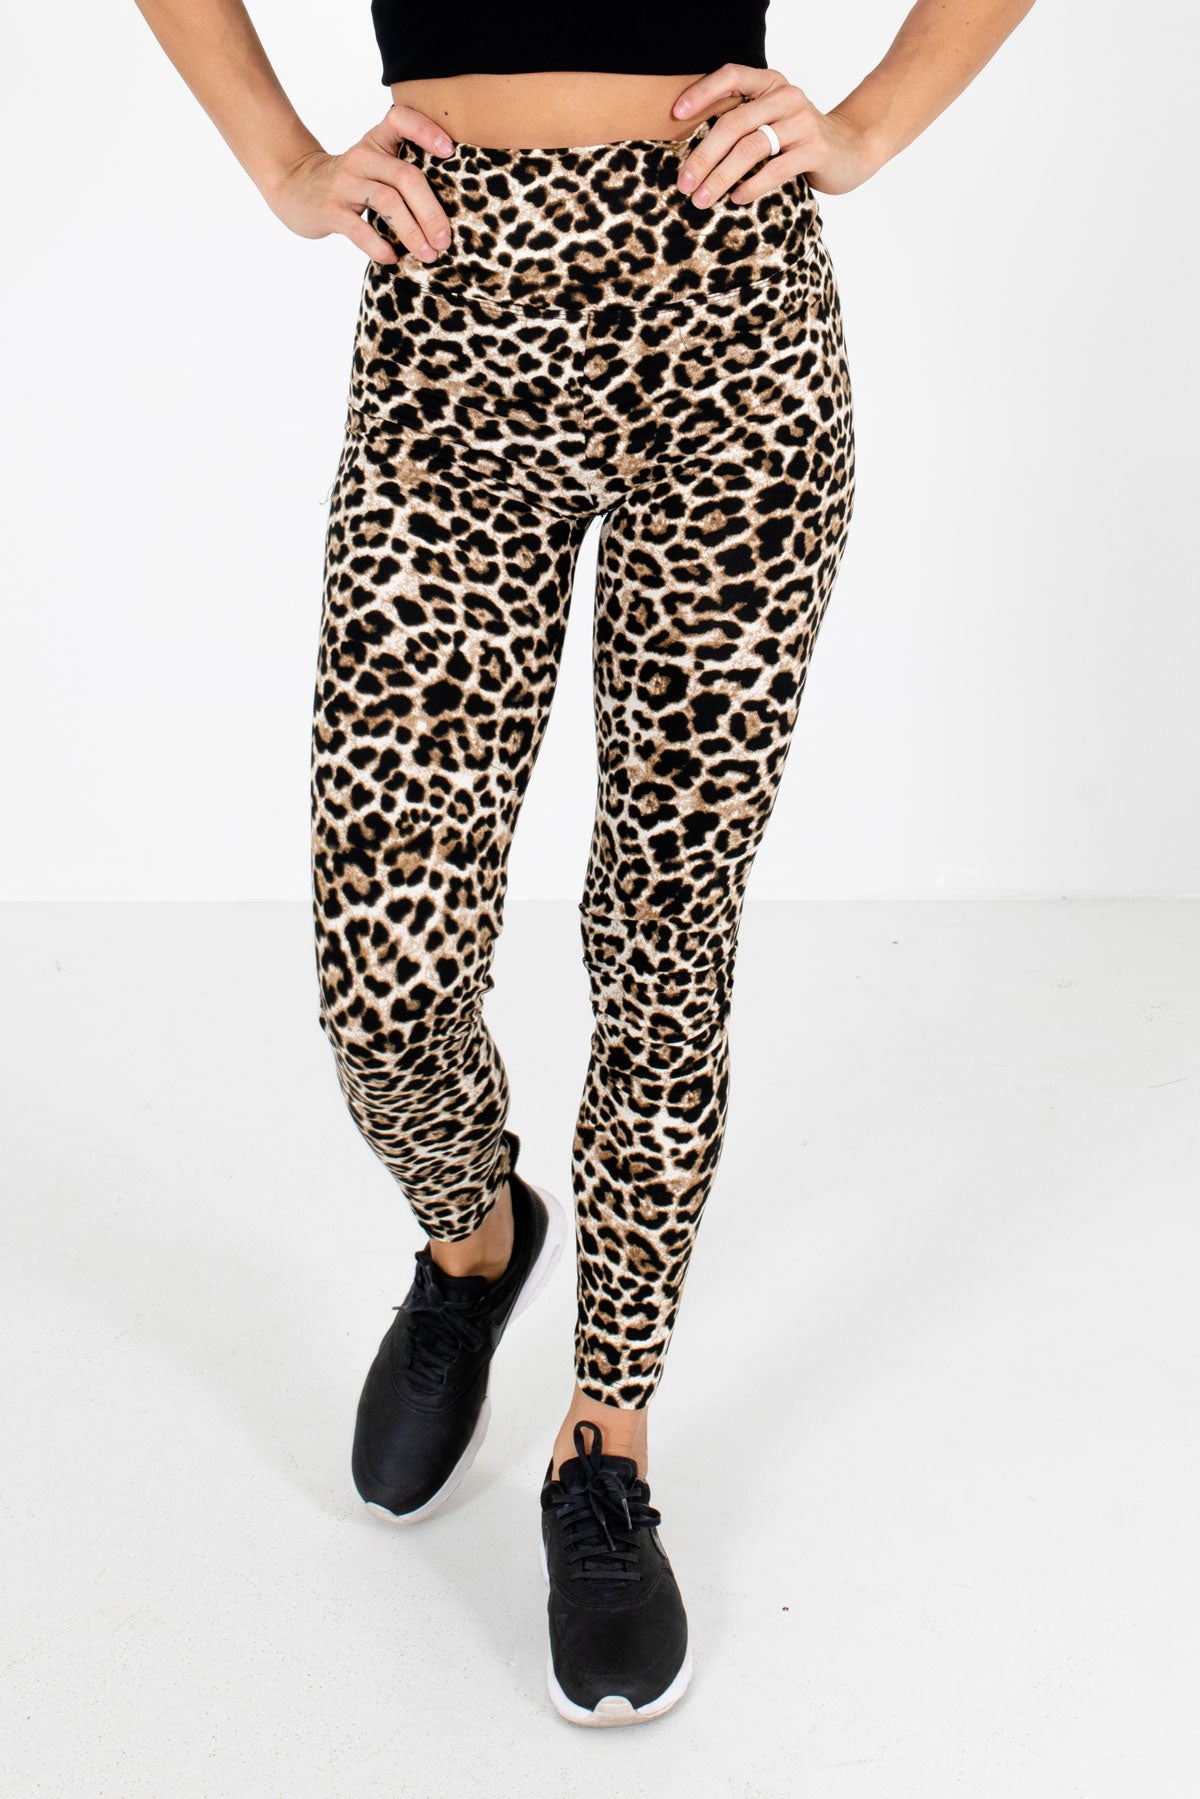 Women's High-Waisted Leggings Wild Fable Beige Leopard Print M/L